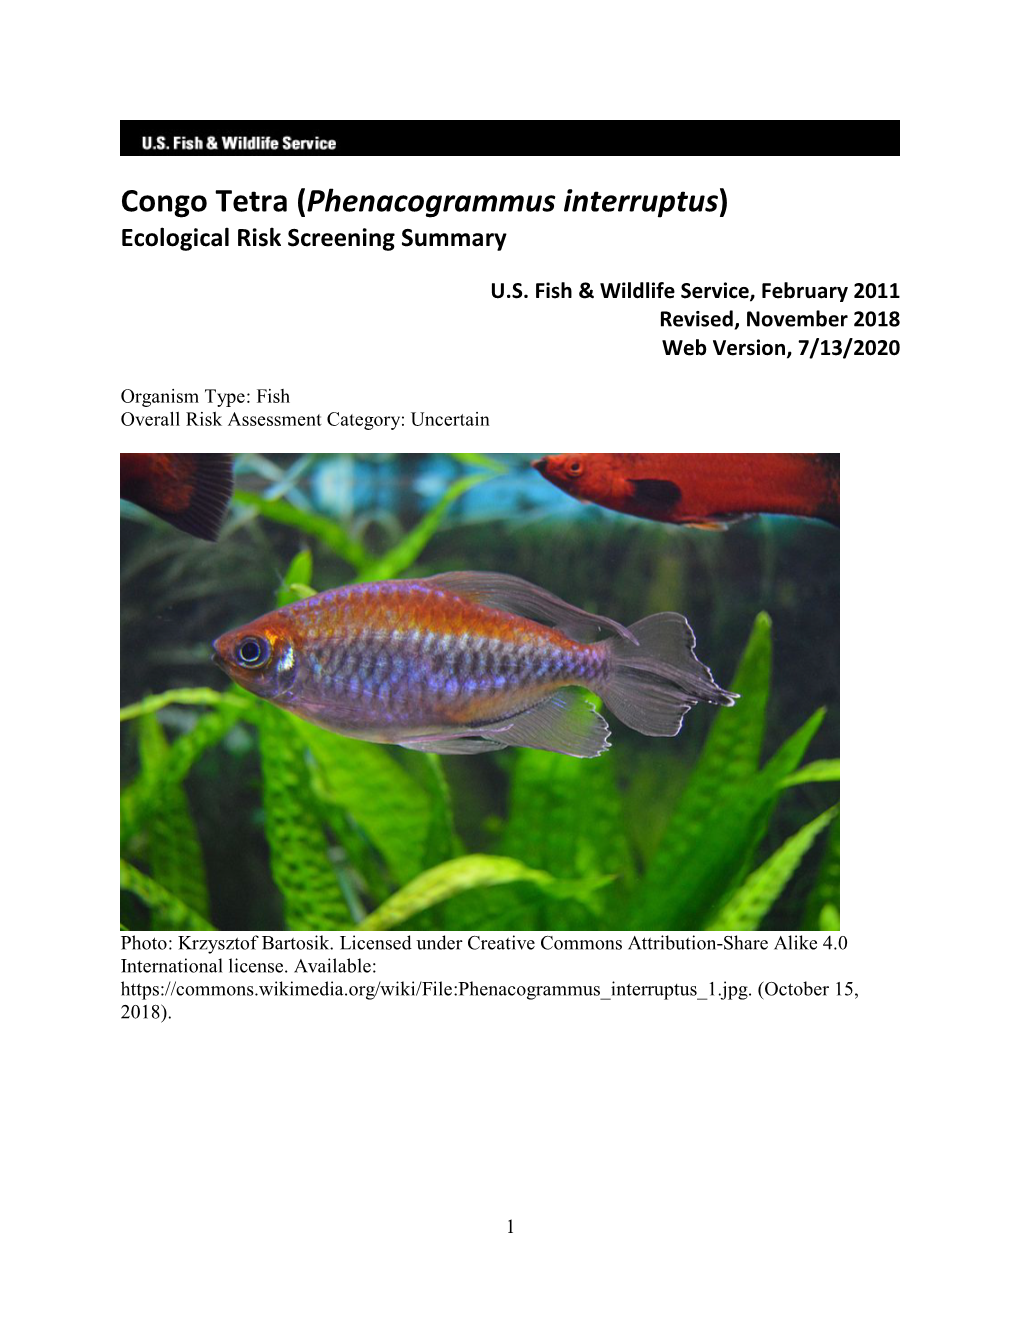 Congo Tetra (Phenacogrammus Interruptus) Ecological Risk Screening Summary